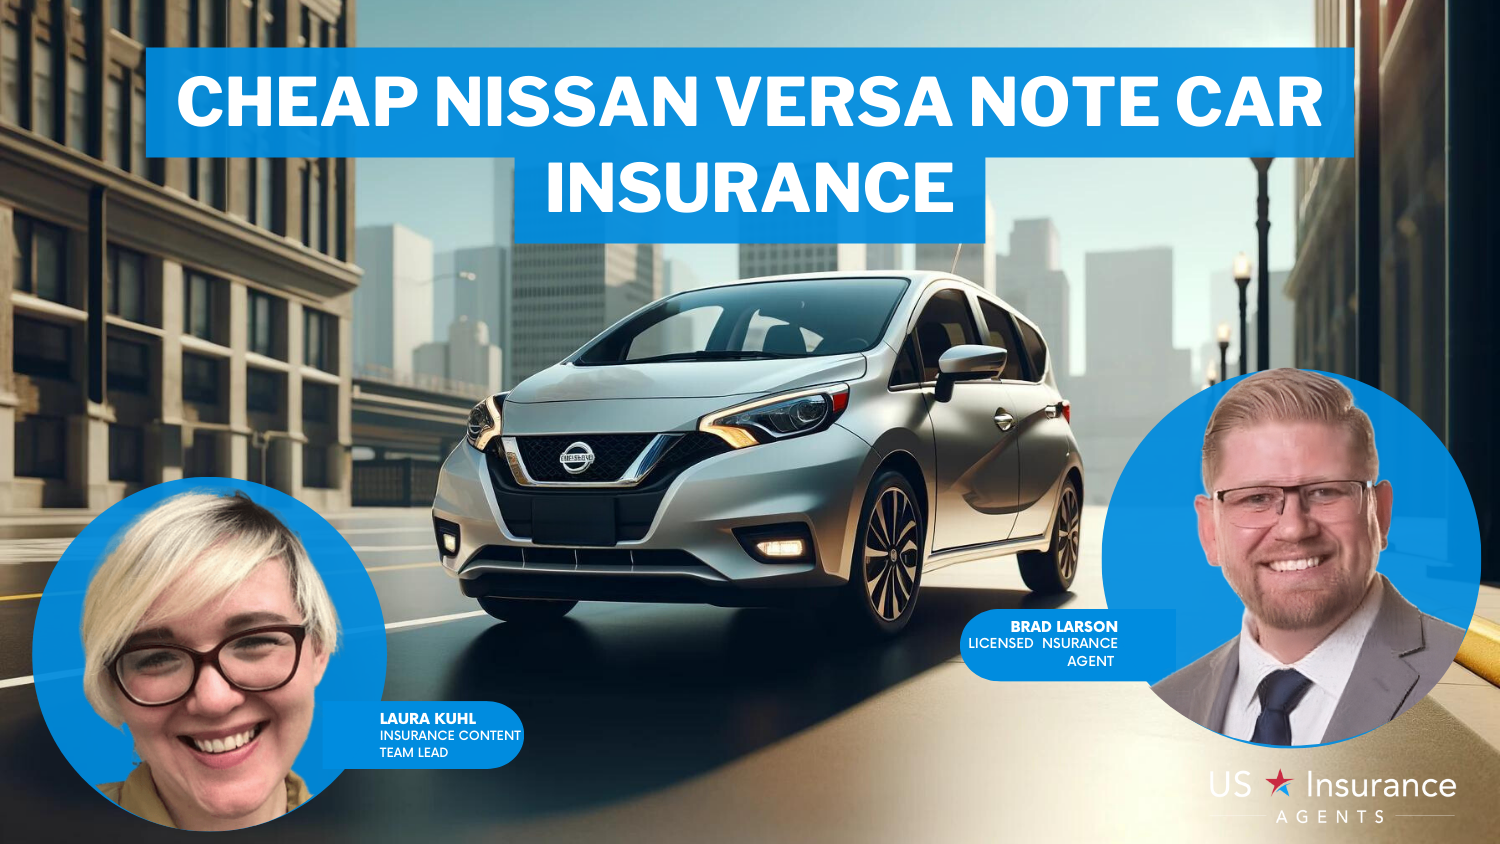 Progressive, USAA and State Farm: cheap Nissan Versa Note car insurance